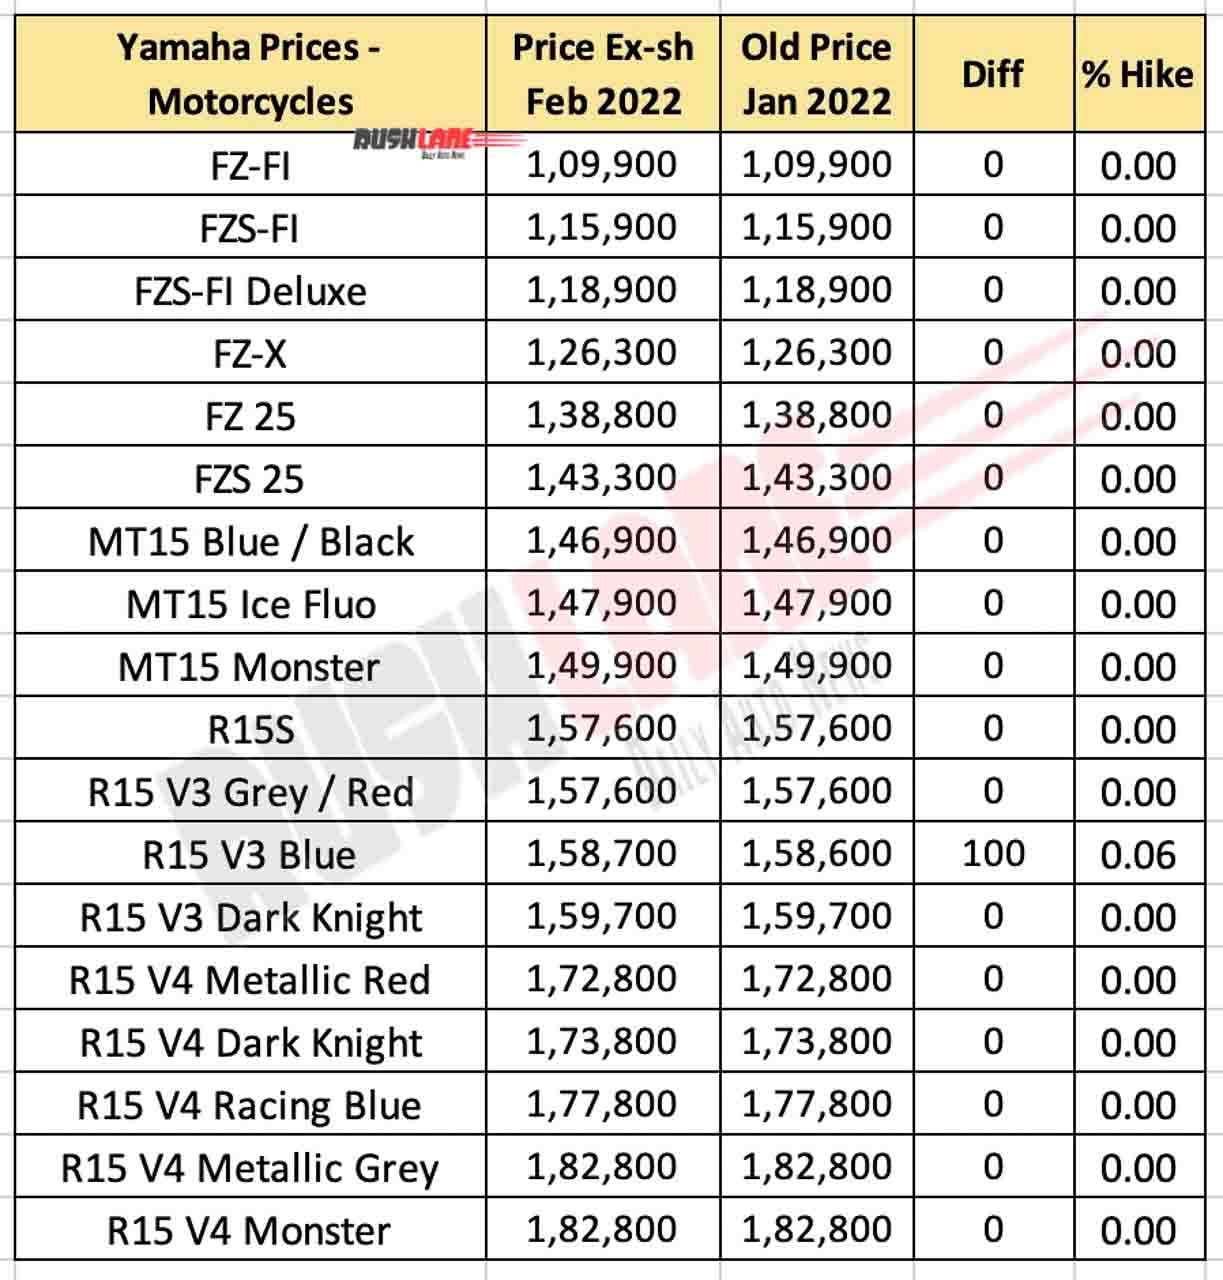 Yamaha Motorcycles Prices Feb 2022 vs Jan 2022